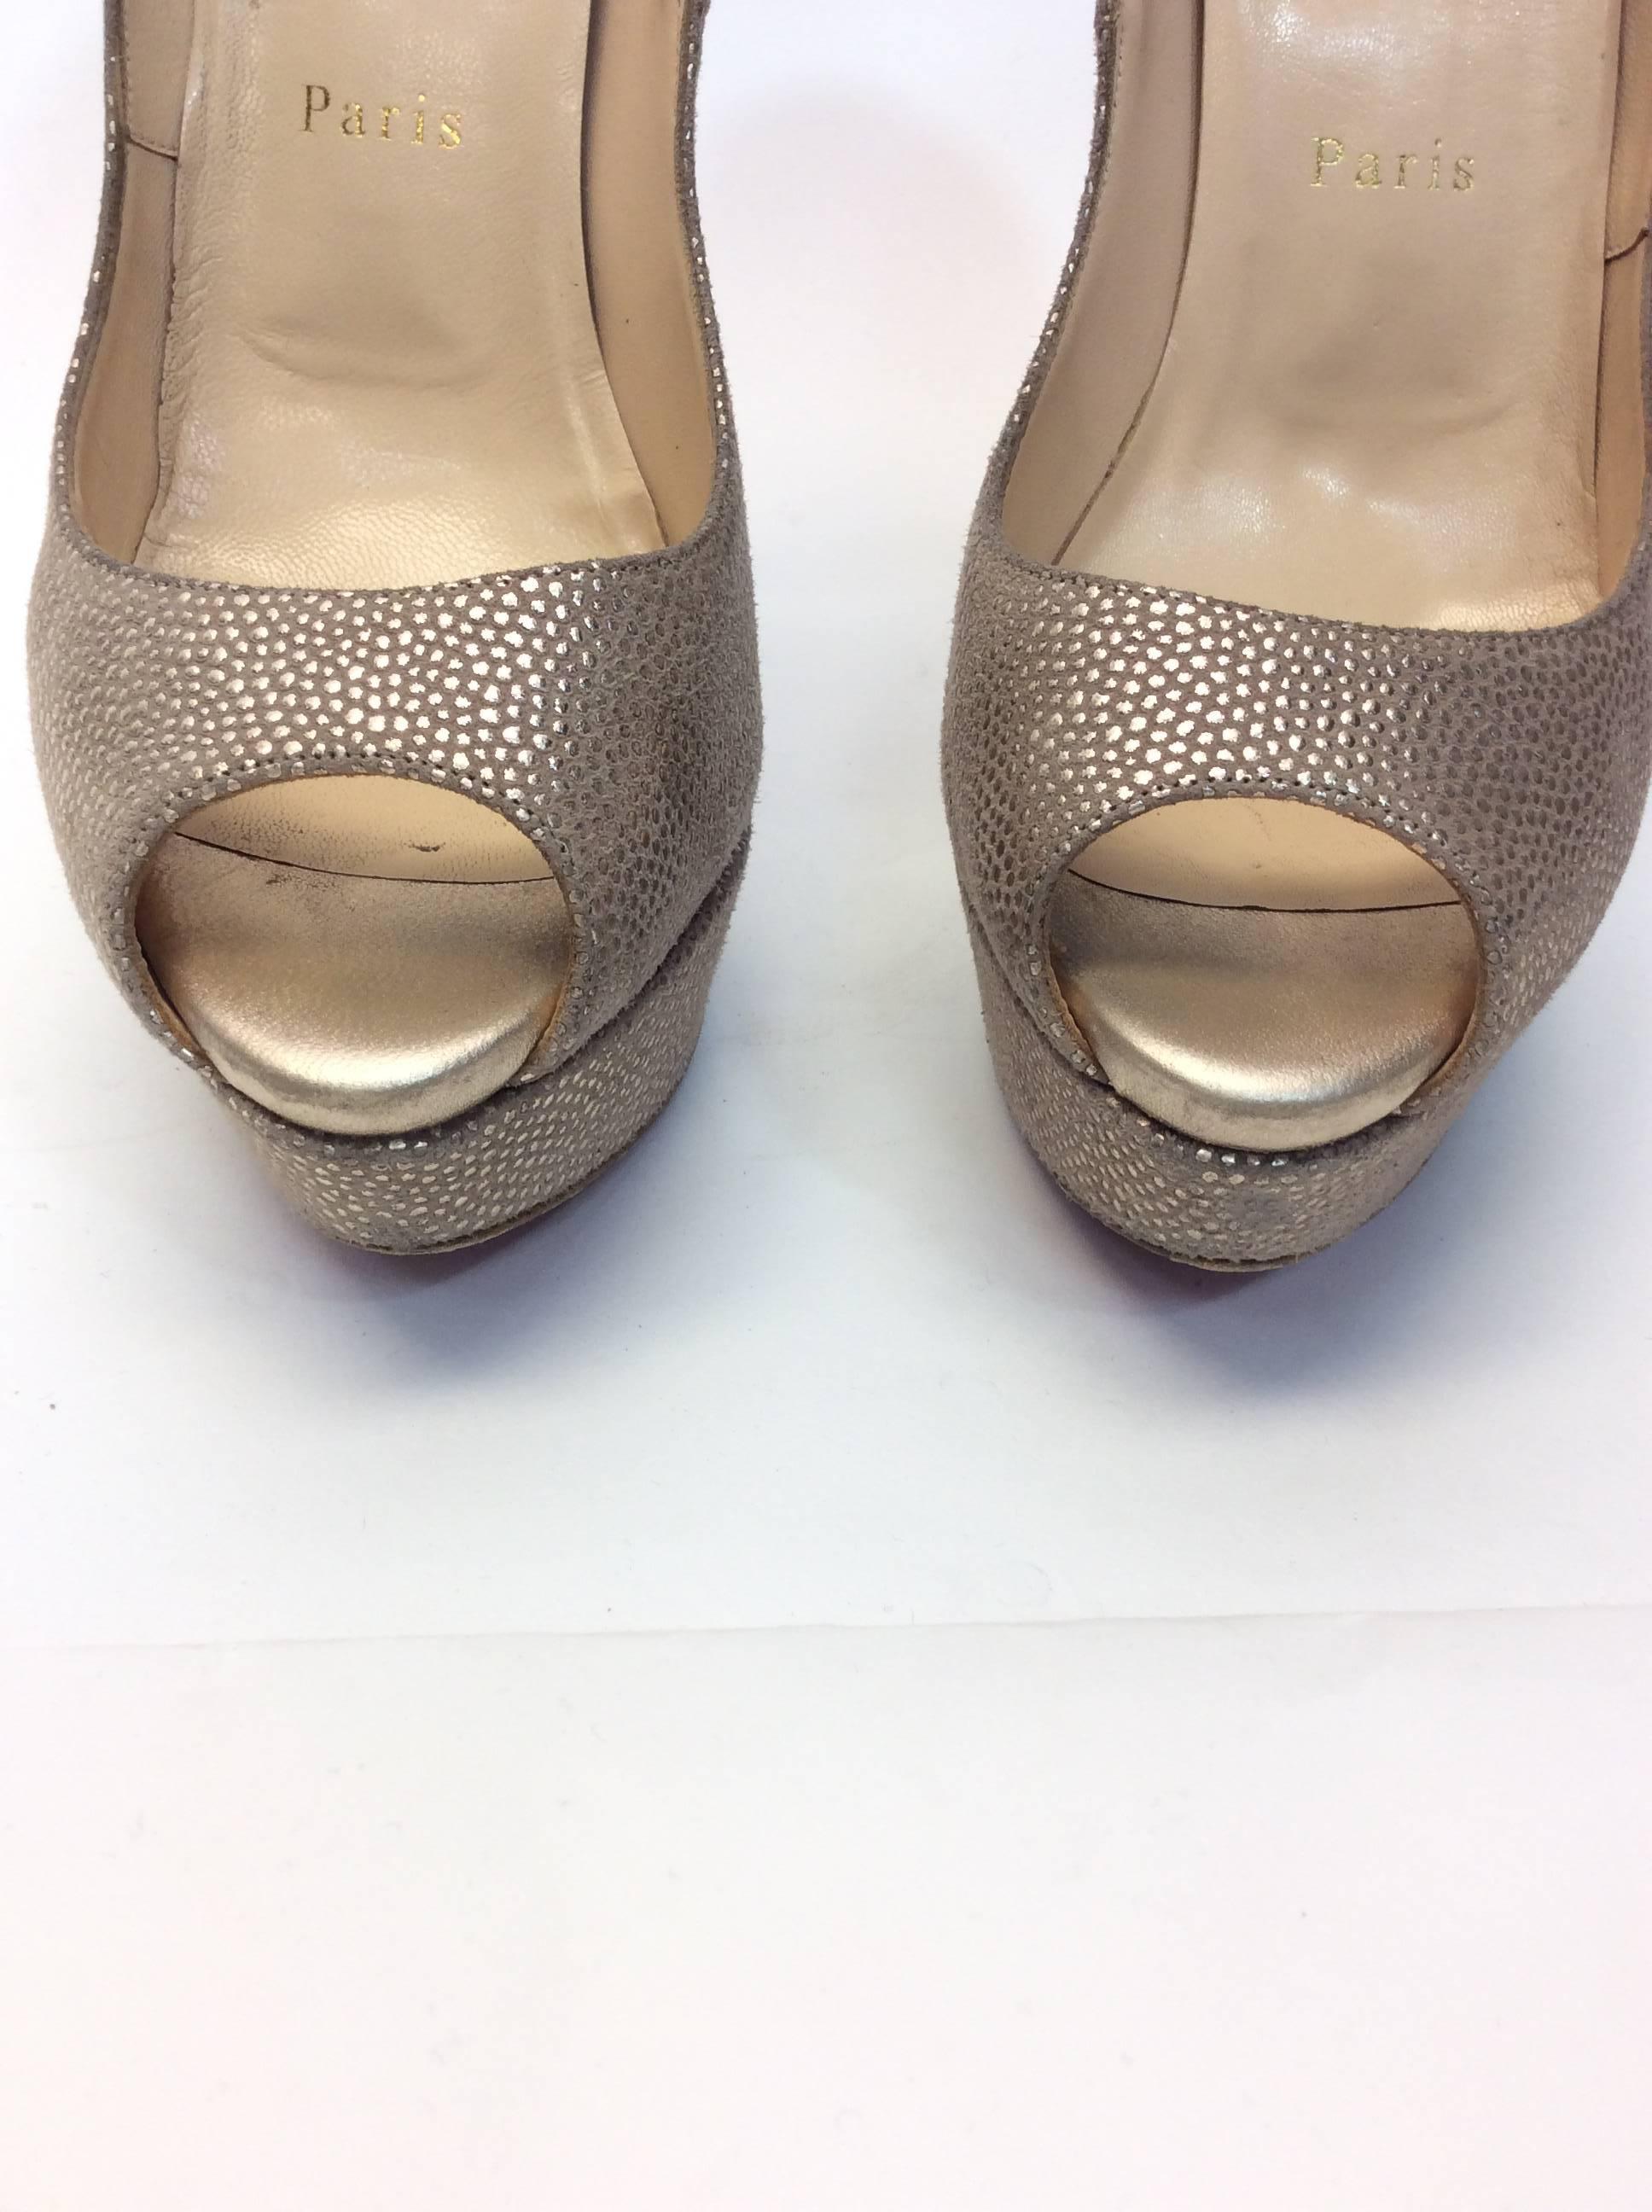 Christian Louboutin Textured Metallic Platform Heels
Size 38.5
6 inch platform 
Textured blush and metallic gold
Peep toe style 